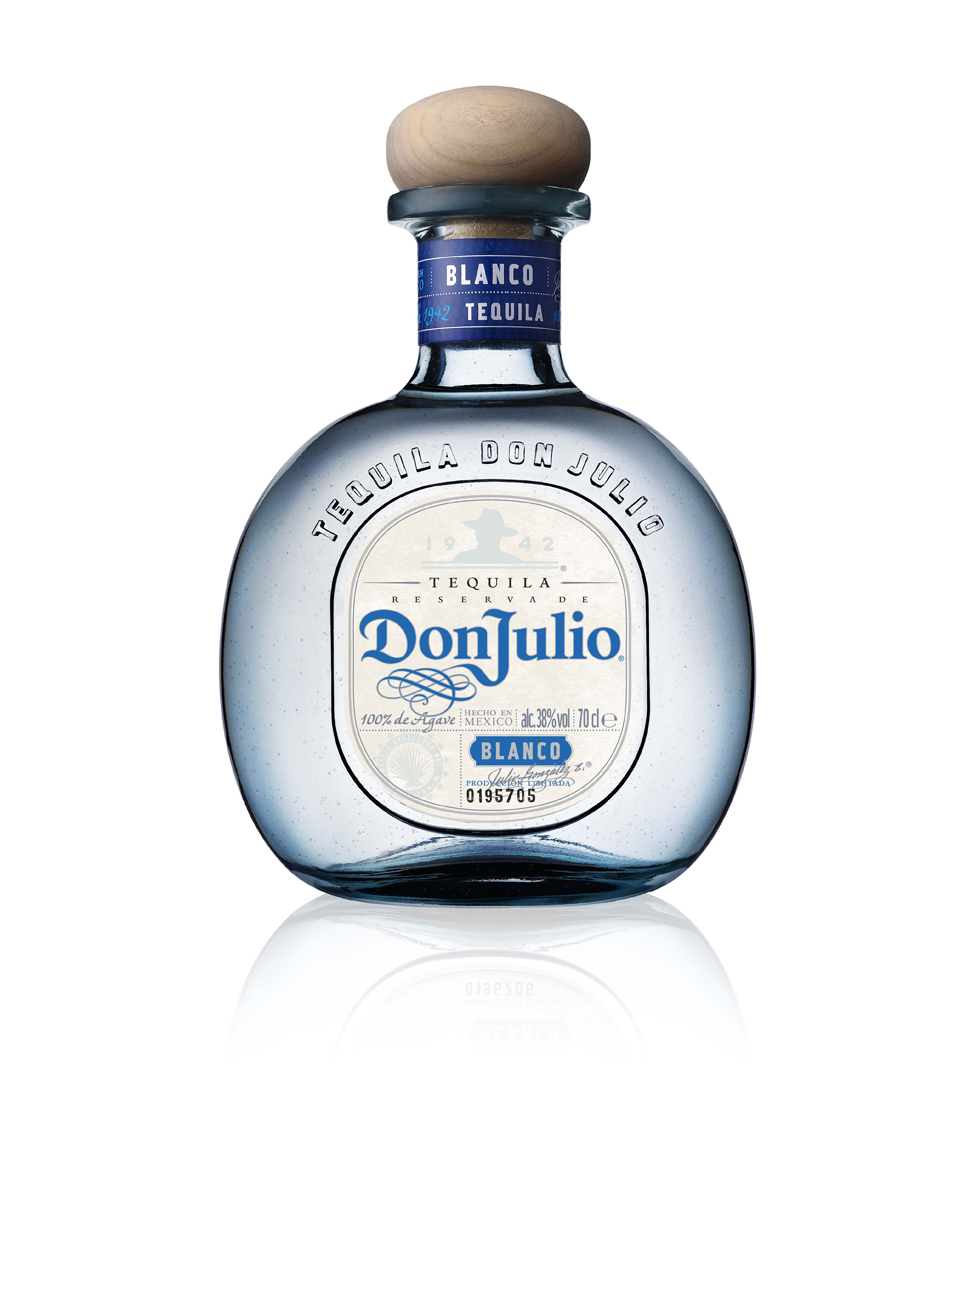 Don Julio Blanco Tequila 38%vol. 0,7l - 100% Agave